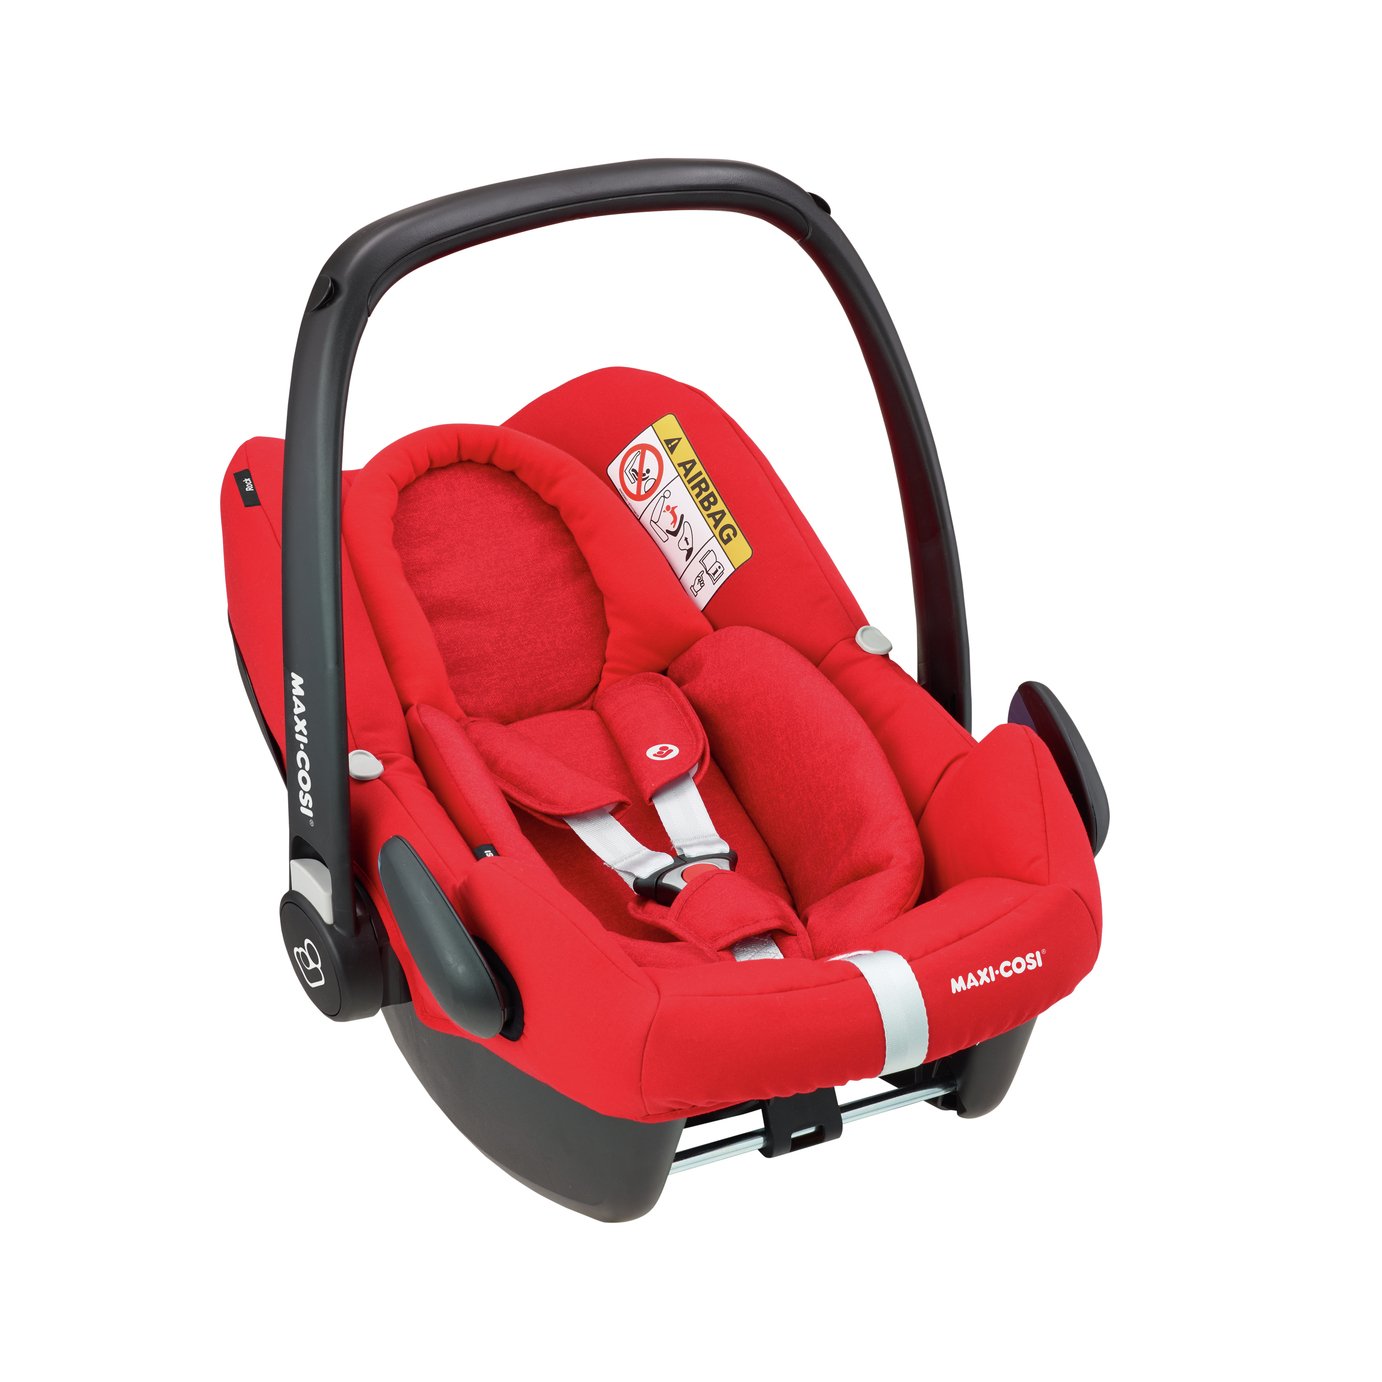 newborn car seat argos